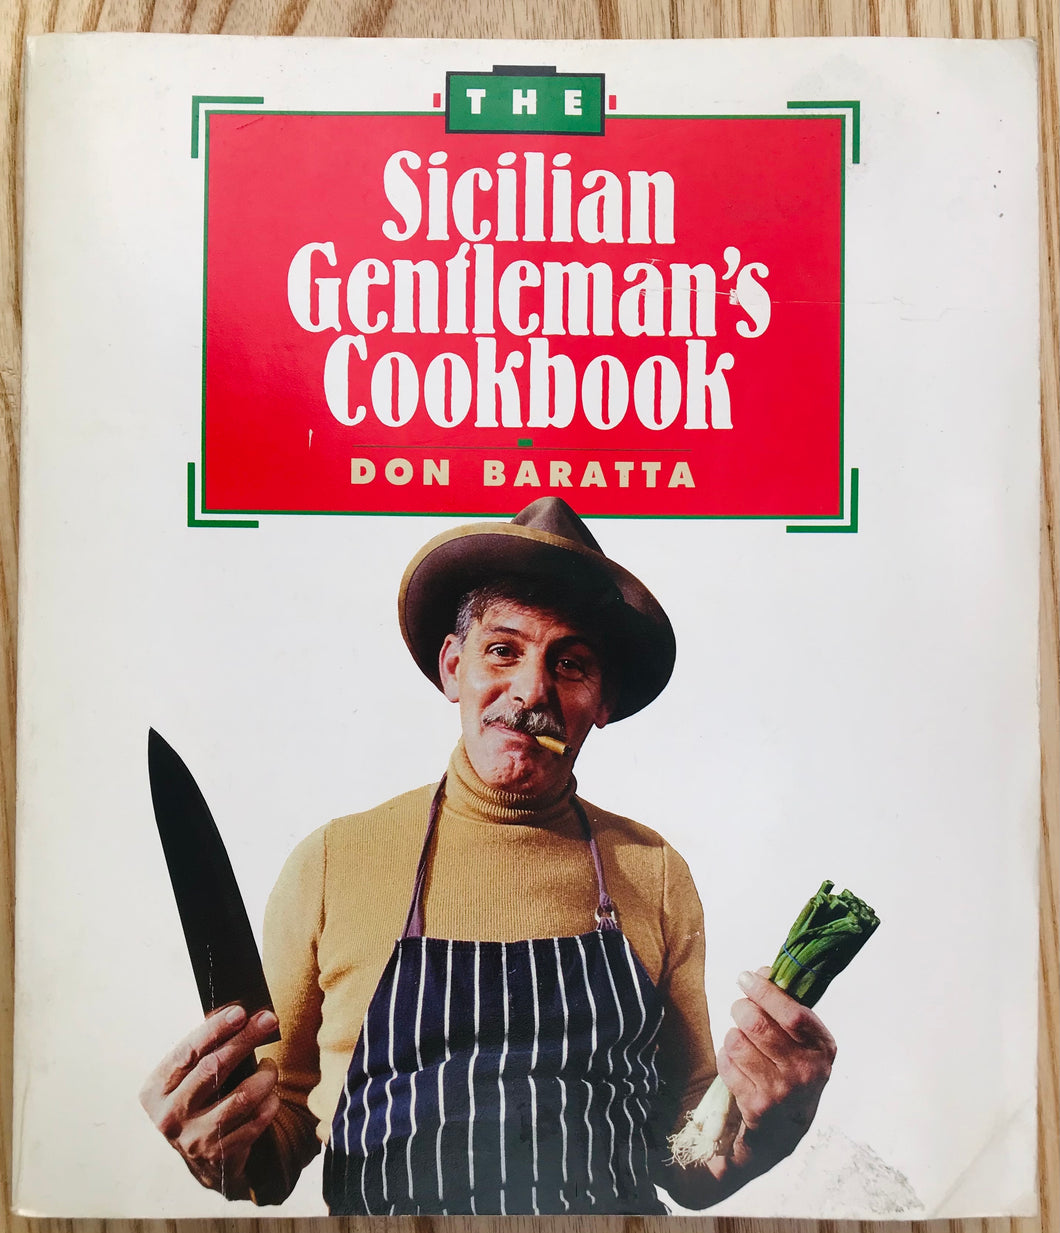 The Sicilian Gentleman's Cookbook by Don Baratta